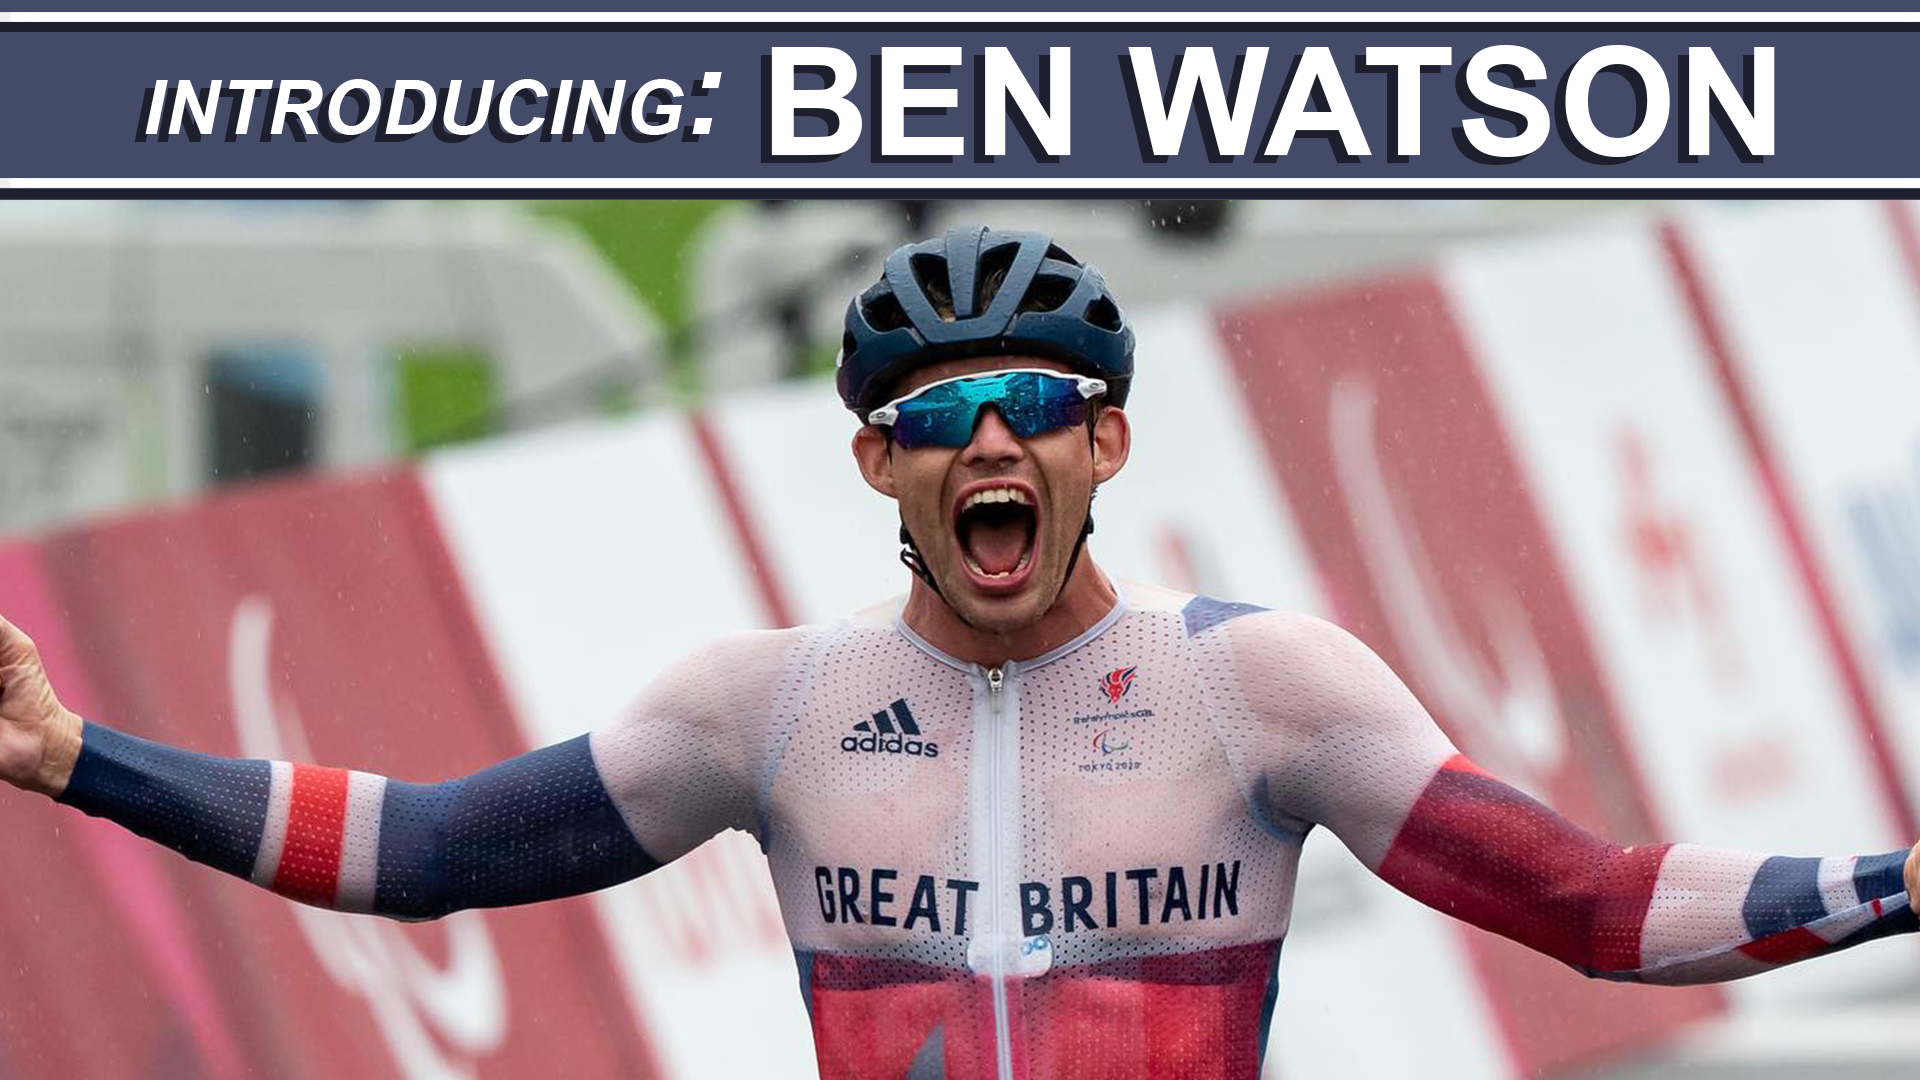 Introducing Ben Watson